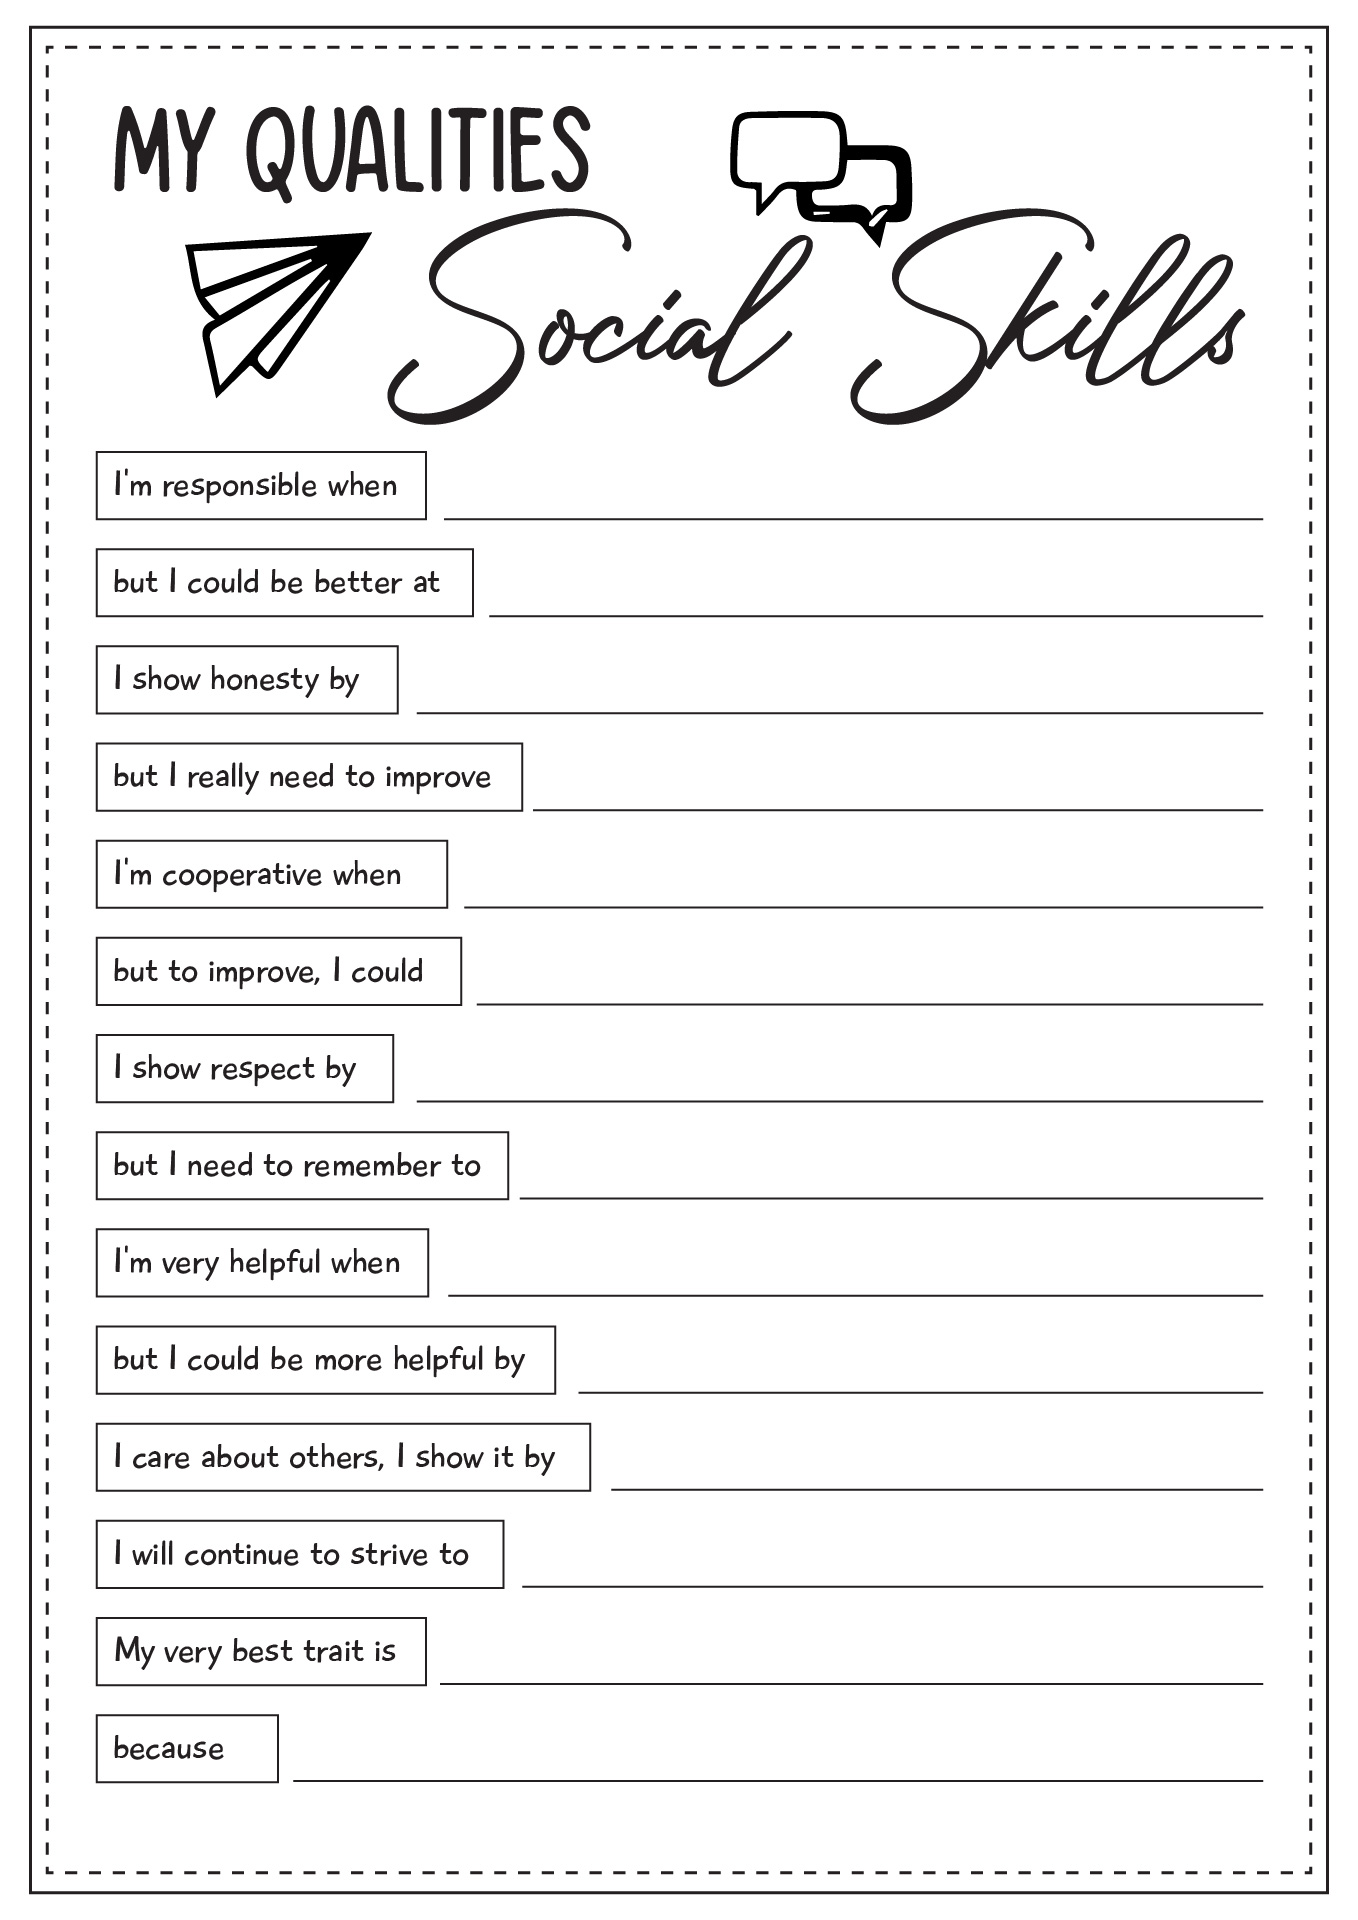 My Qualities Social Skills Worksheets